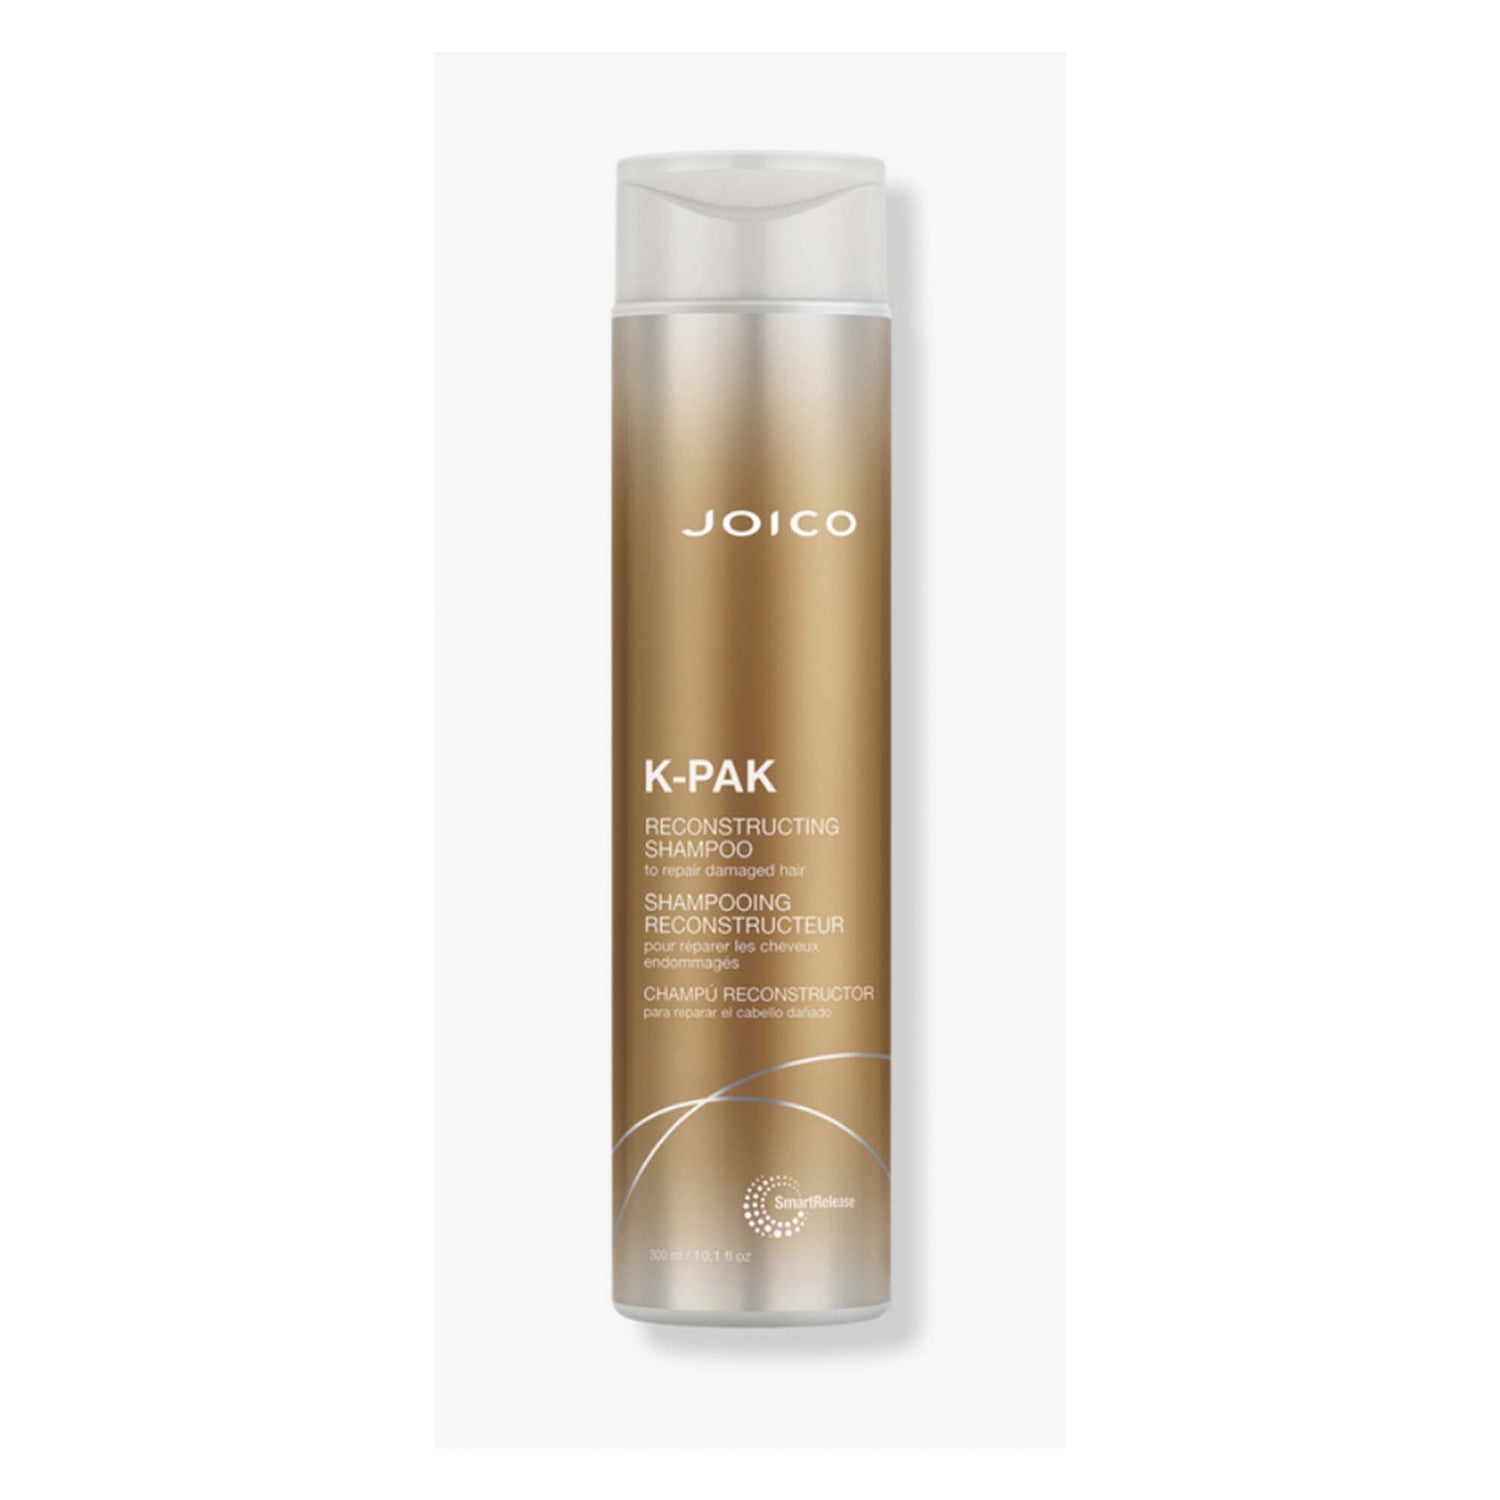 Joico K-PAK Reconstructing Shampoo 10.1oz